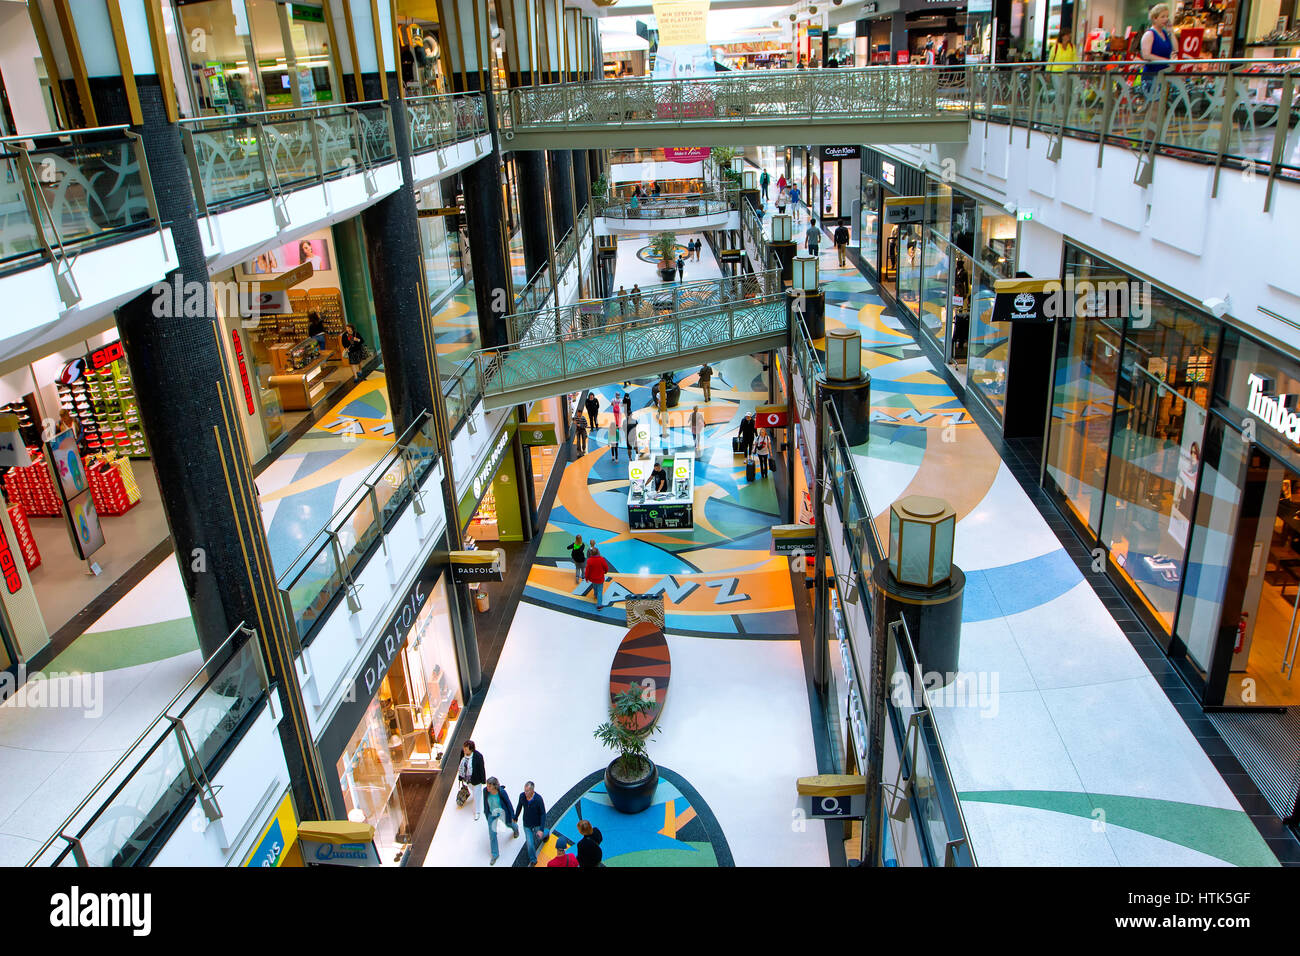 Alexa shopping Mall in Berlin Stock Photo - Alamy